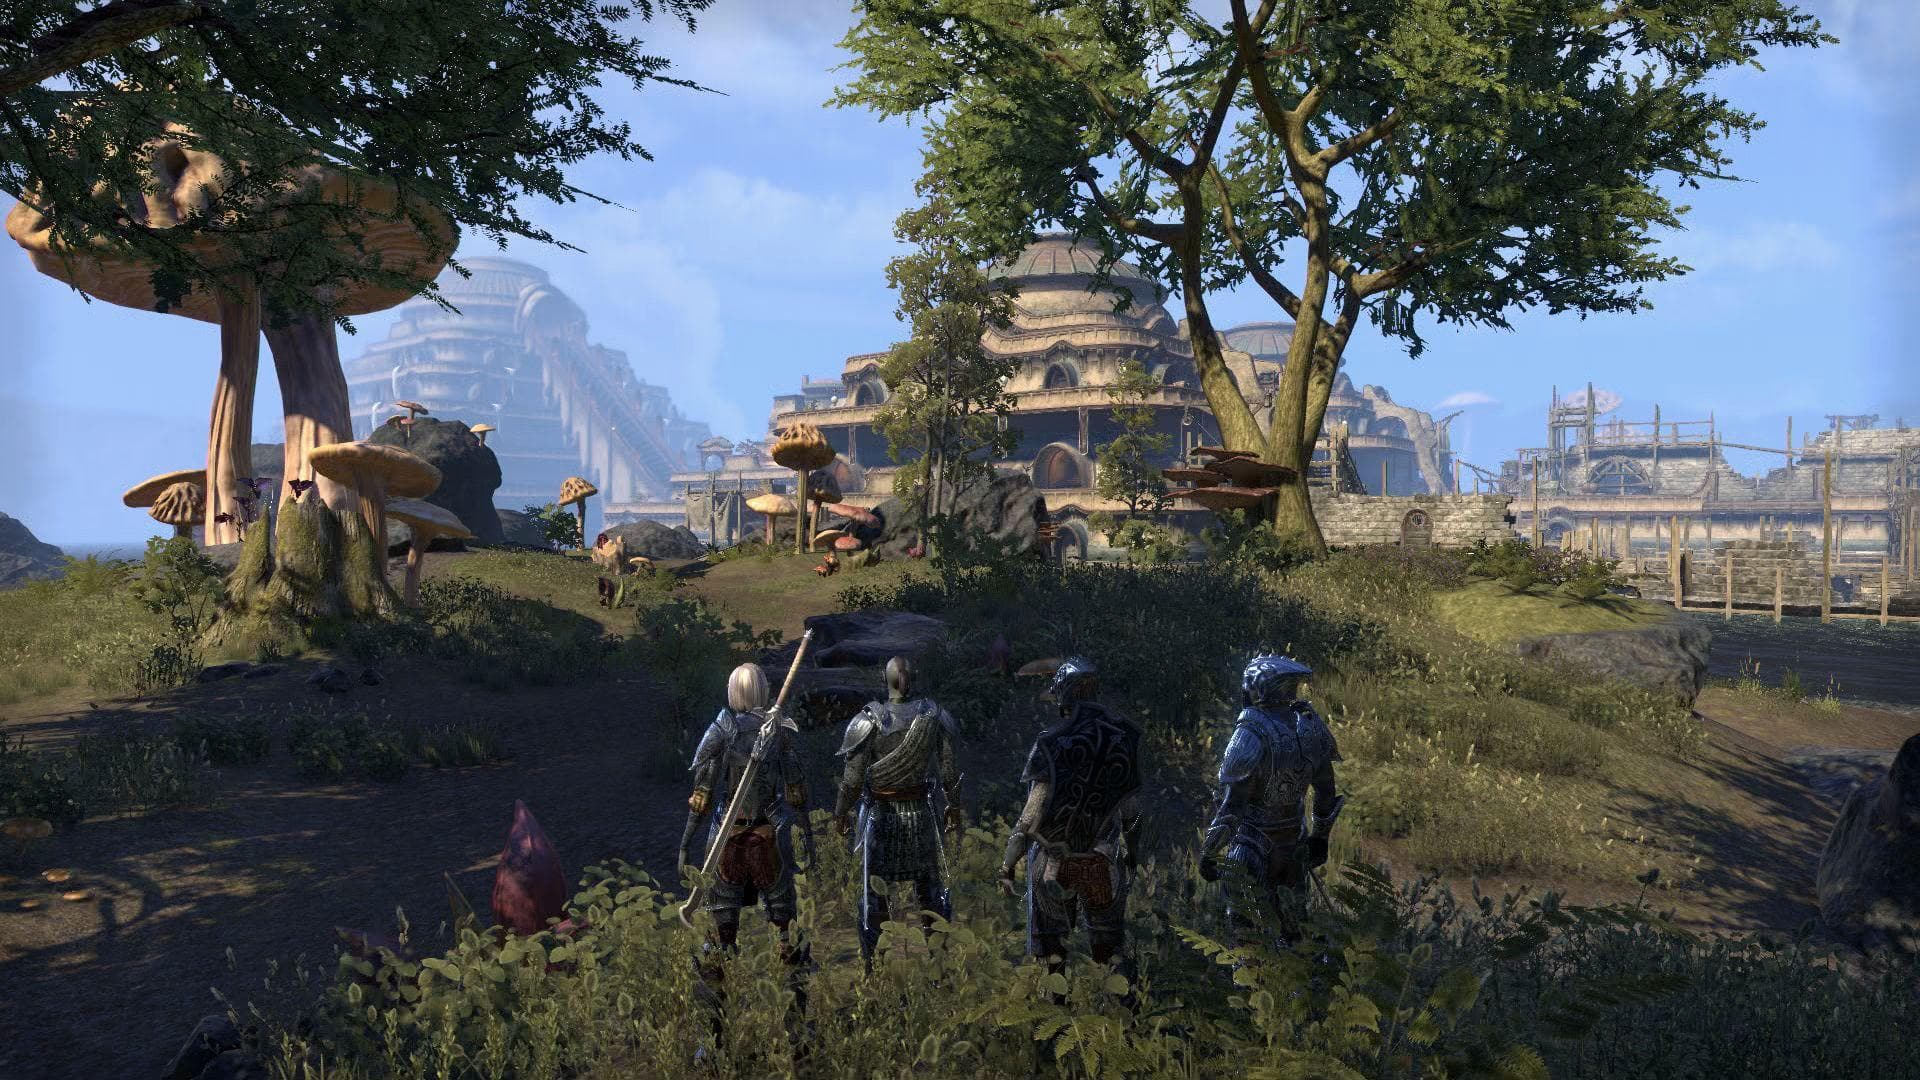 Return to Morrowind with The Elder Scrolls Online